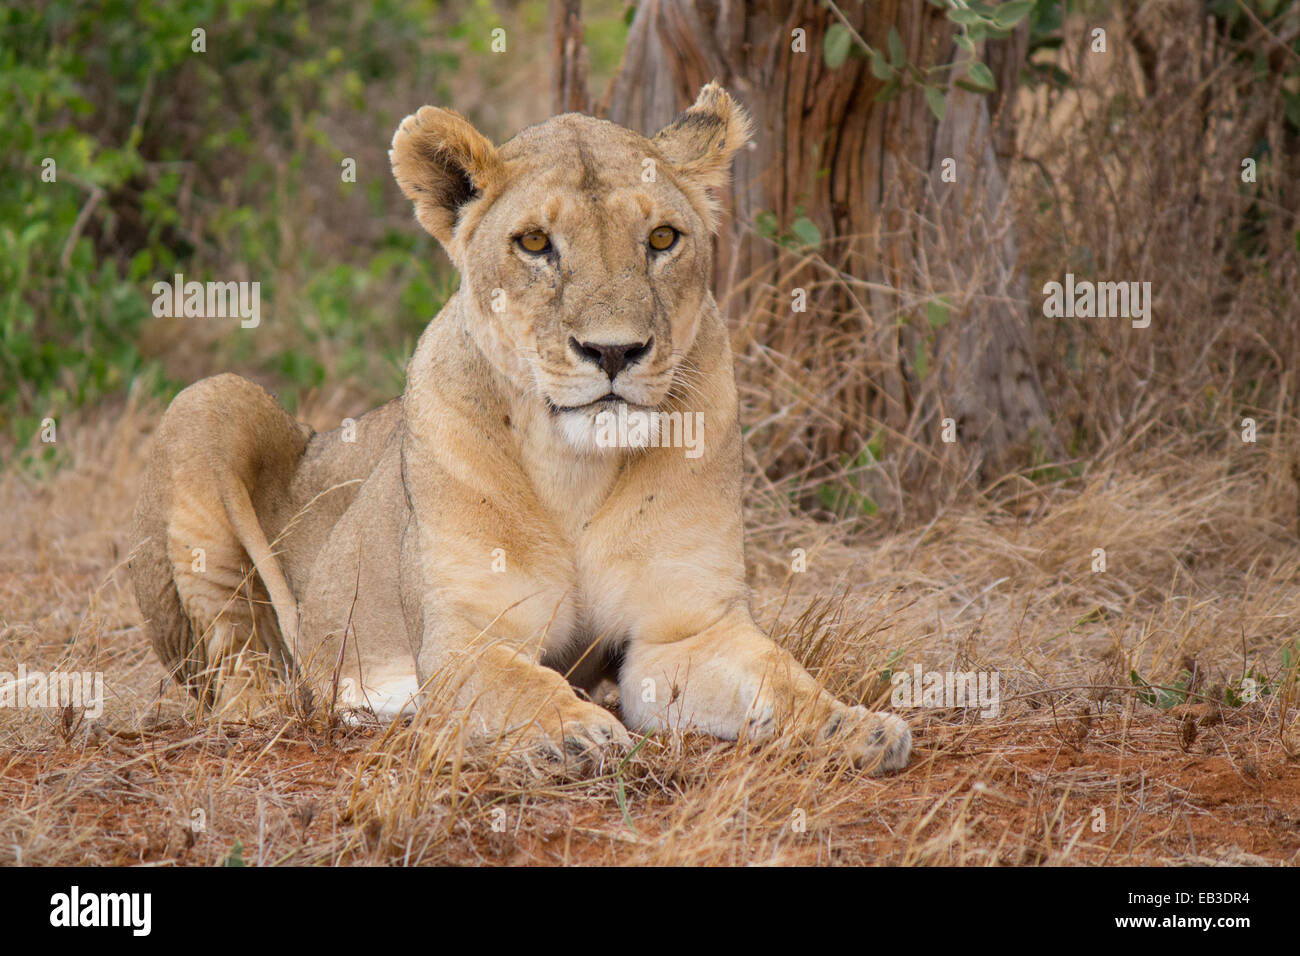 Kenya, Tsavo East Park, Lionne lying in grass Banque D'Images